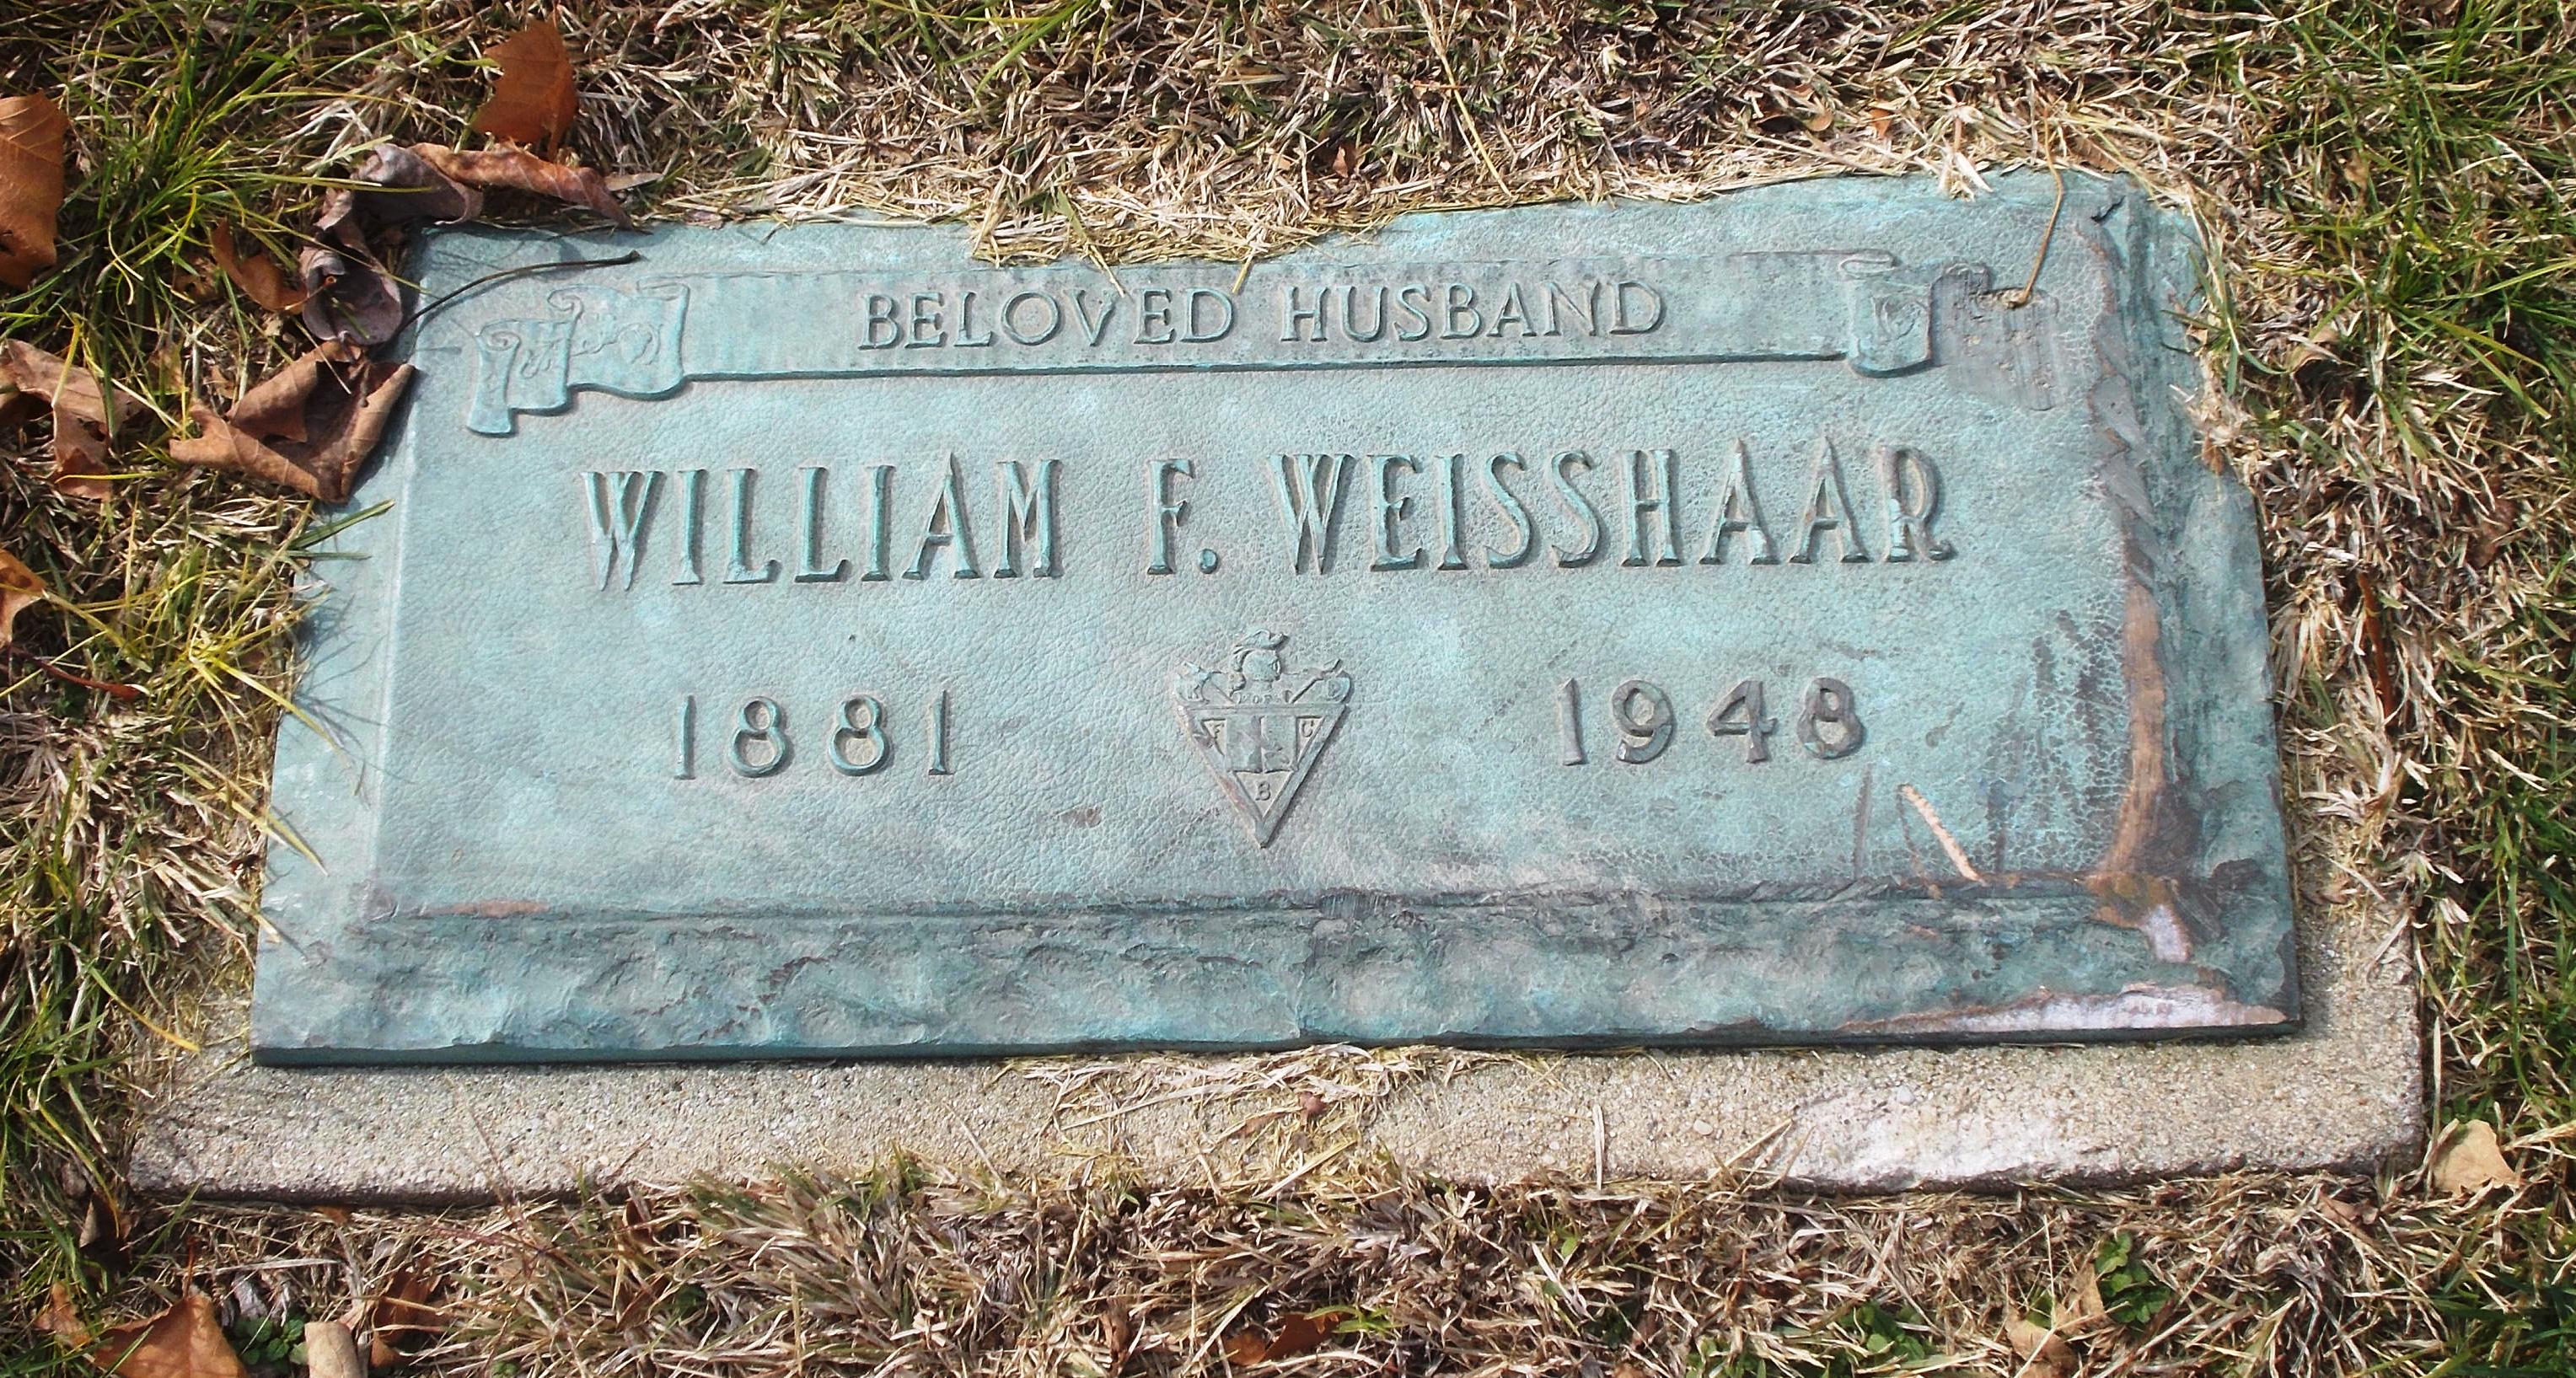 William F Weisshaar